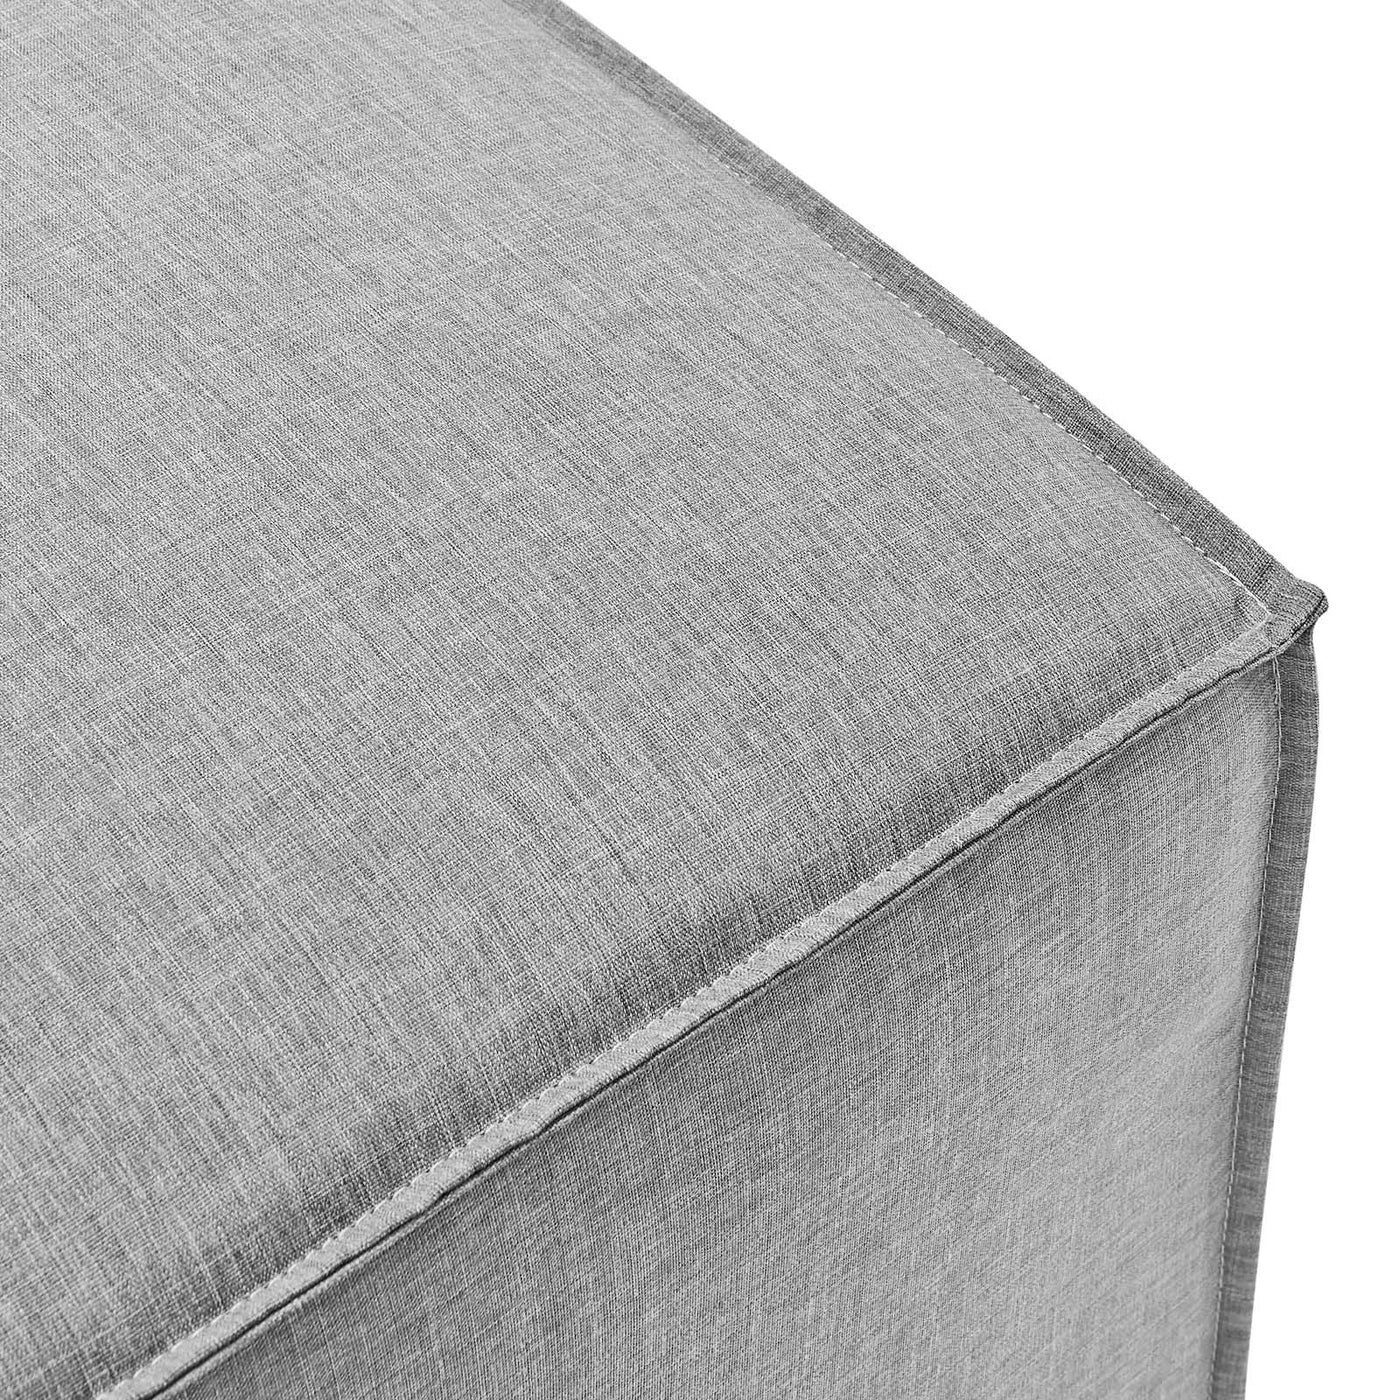 Saybrook Outdoor Patio Upholstered Sectional Sofa Ottoman